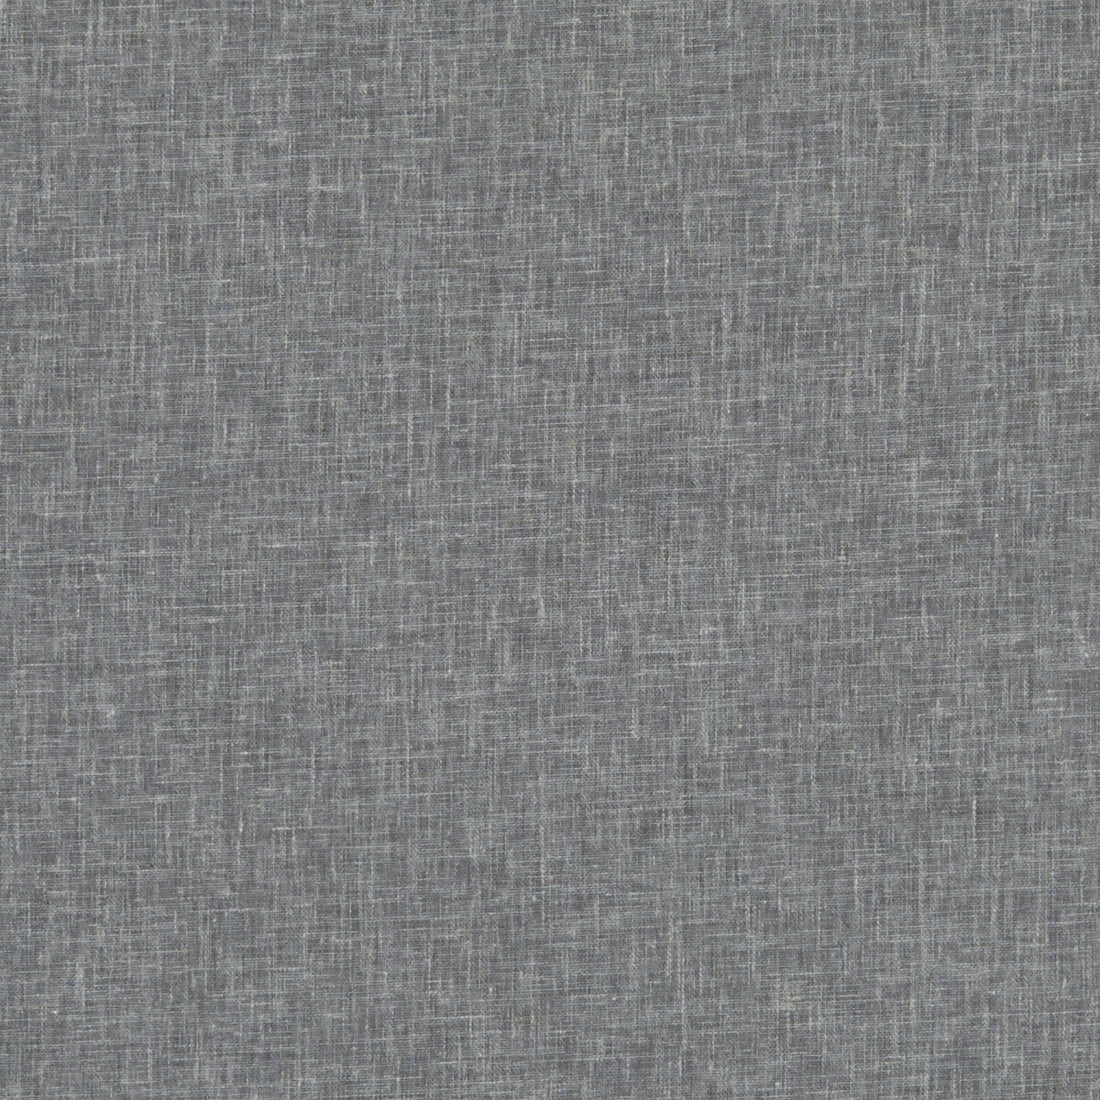 Midori fabric in granite color - pattern F1068/17.CAC.0 - by Clarke And Clarke in the Clarke &amp; Clarke Midori collection